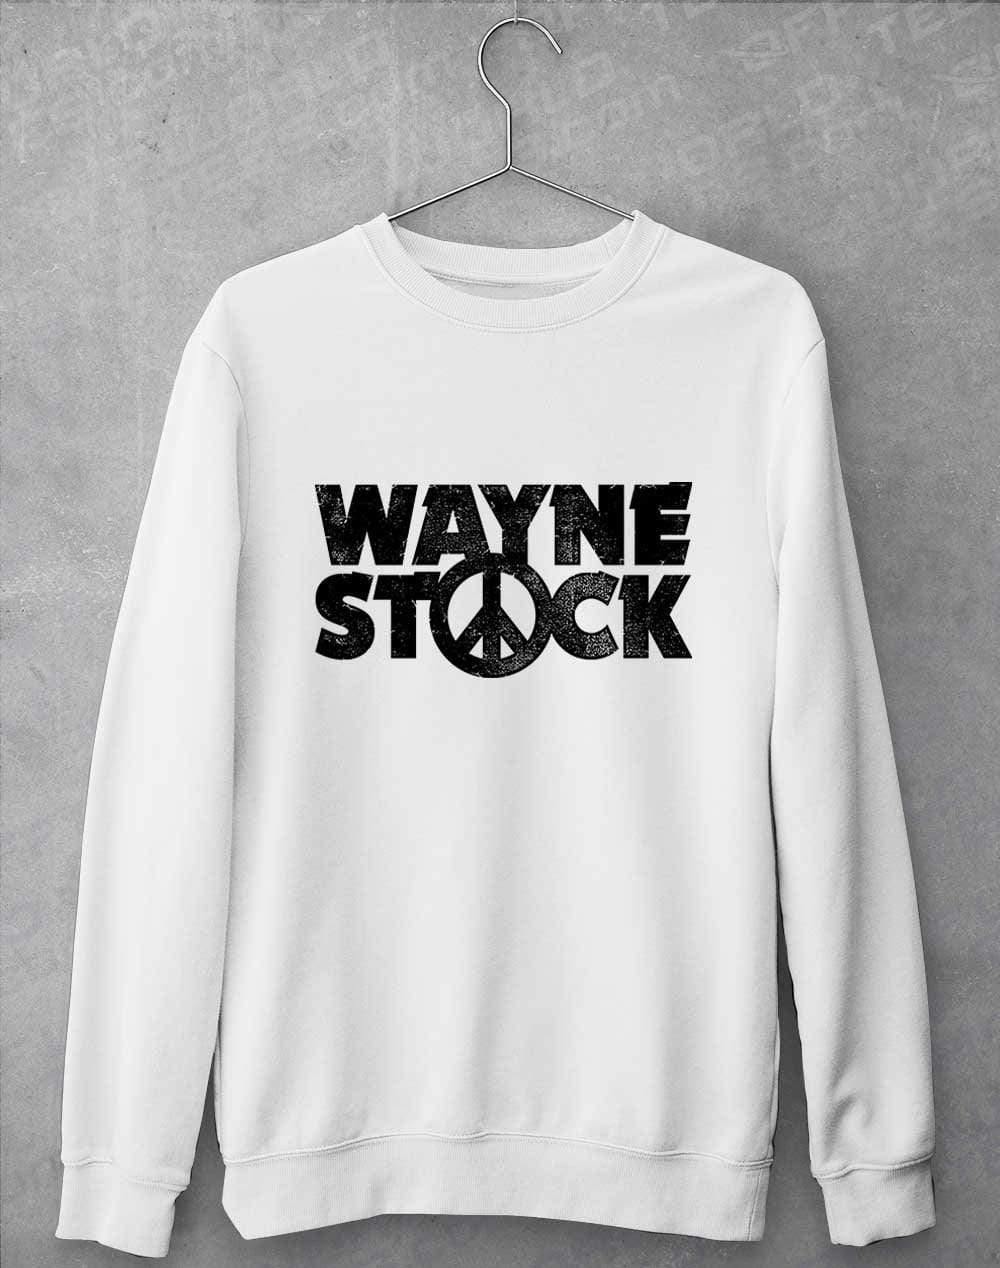 Waynestock Sweatshirt S / Arctic White  - Off World Tees